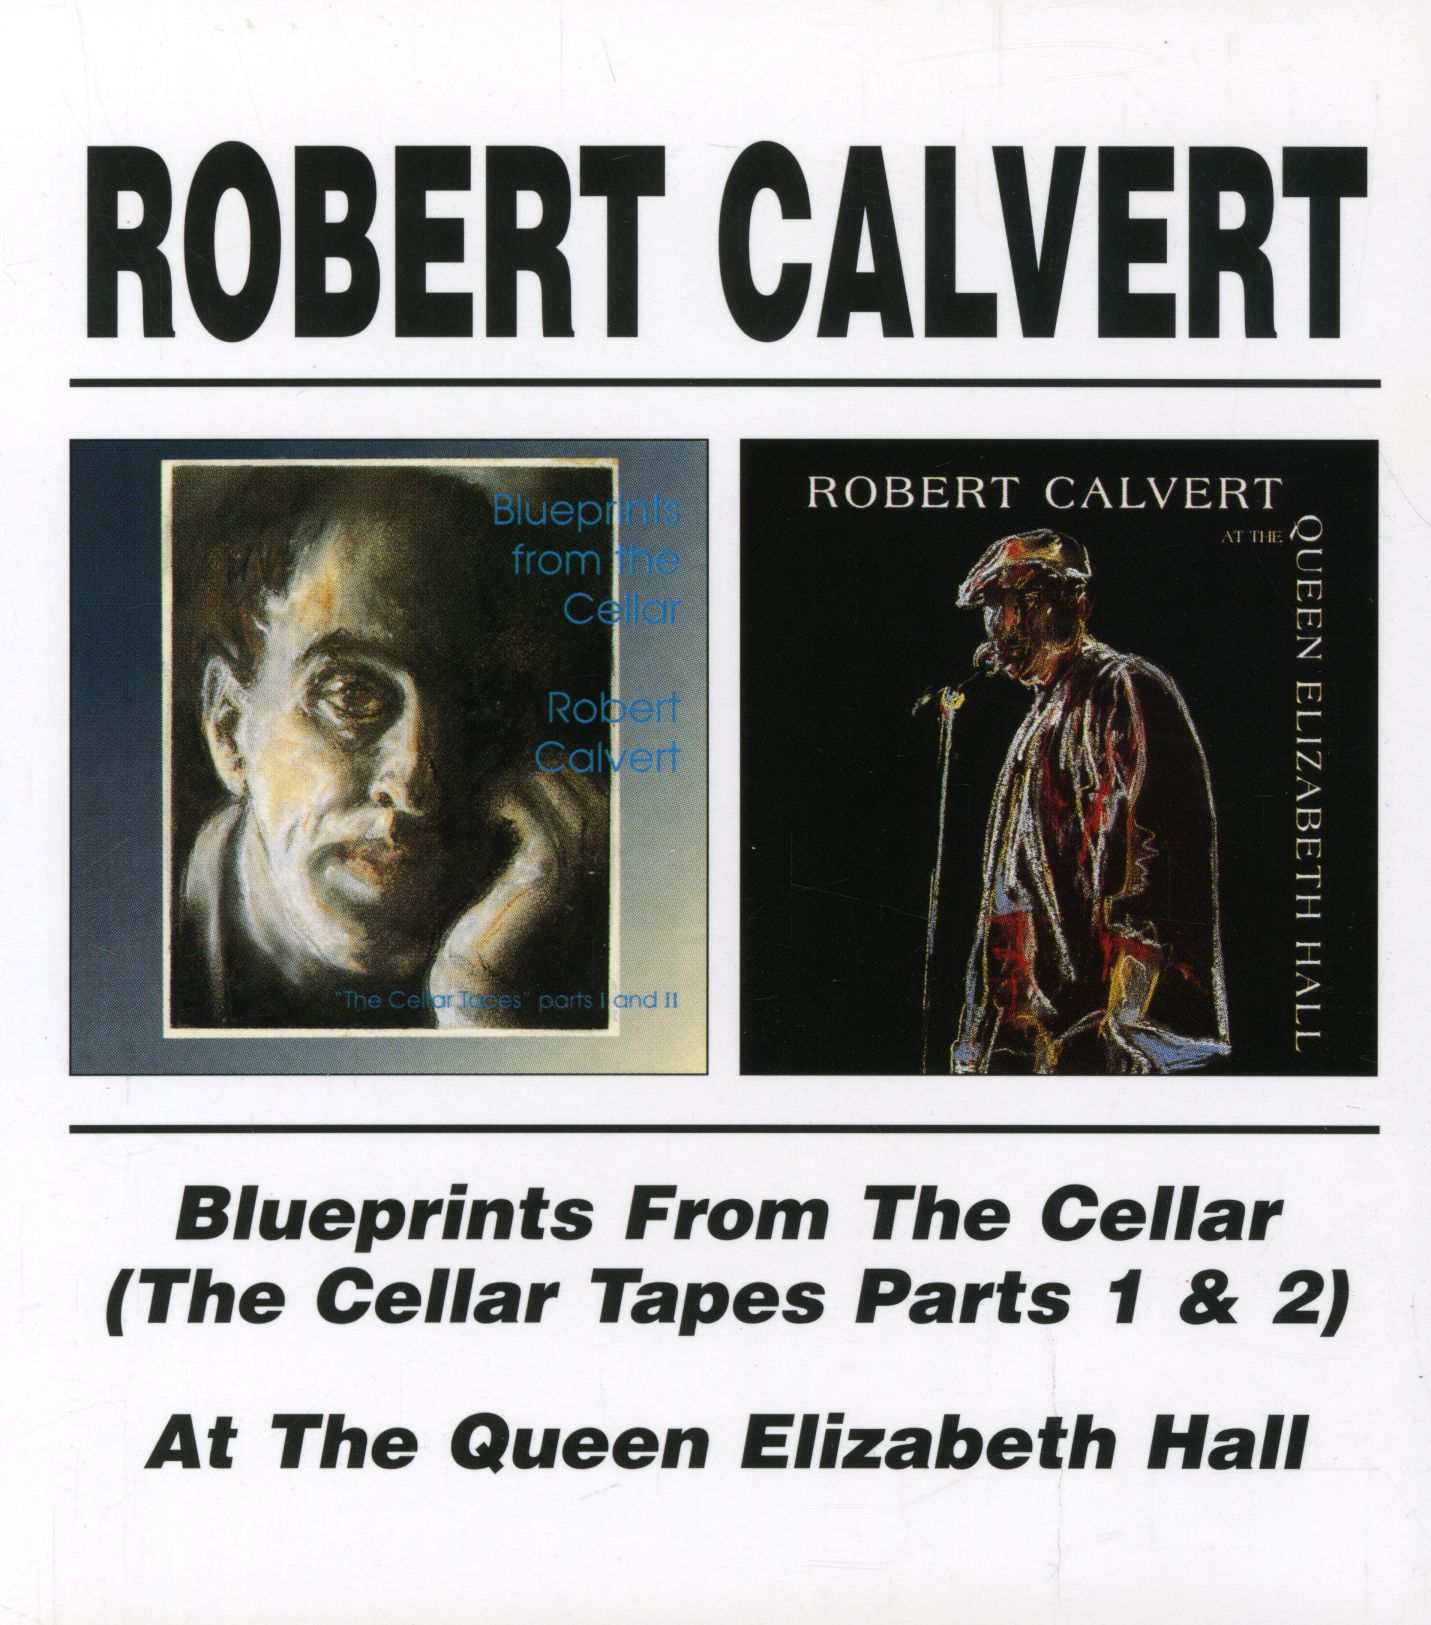 BLUEPRINTS FROM CELLAR / AT QUEEN ELIZABETH HALL